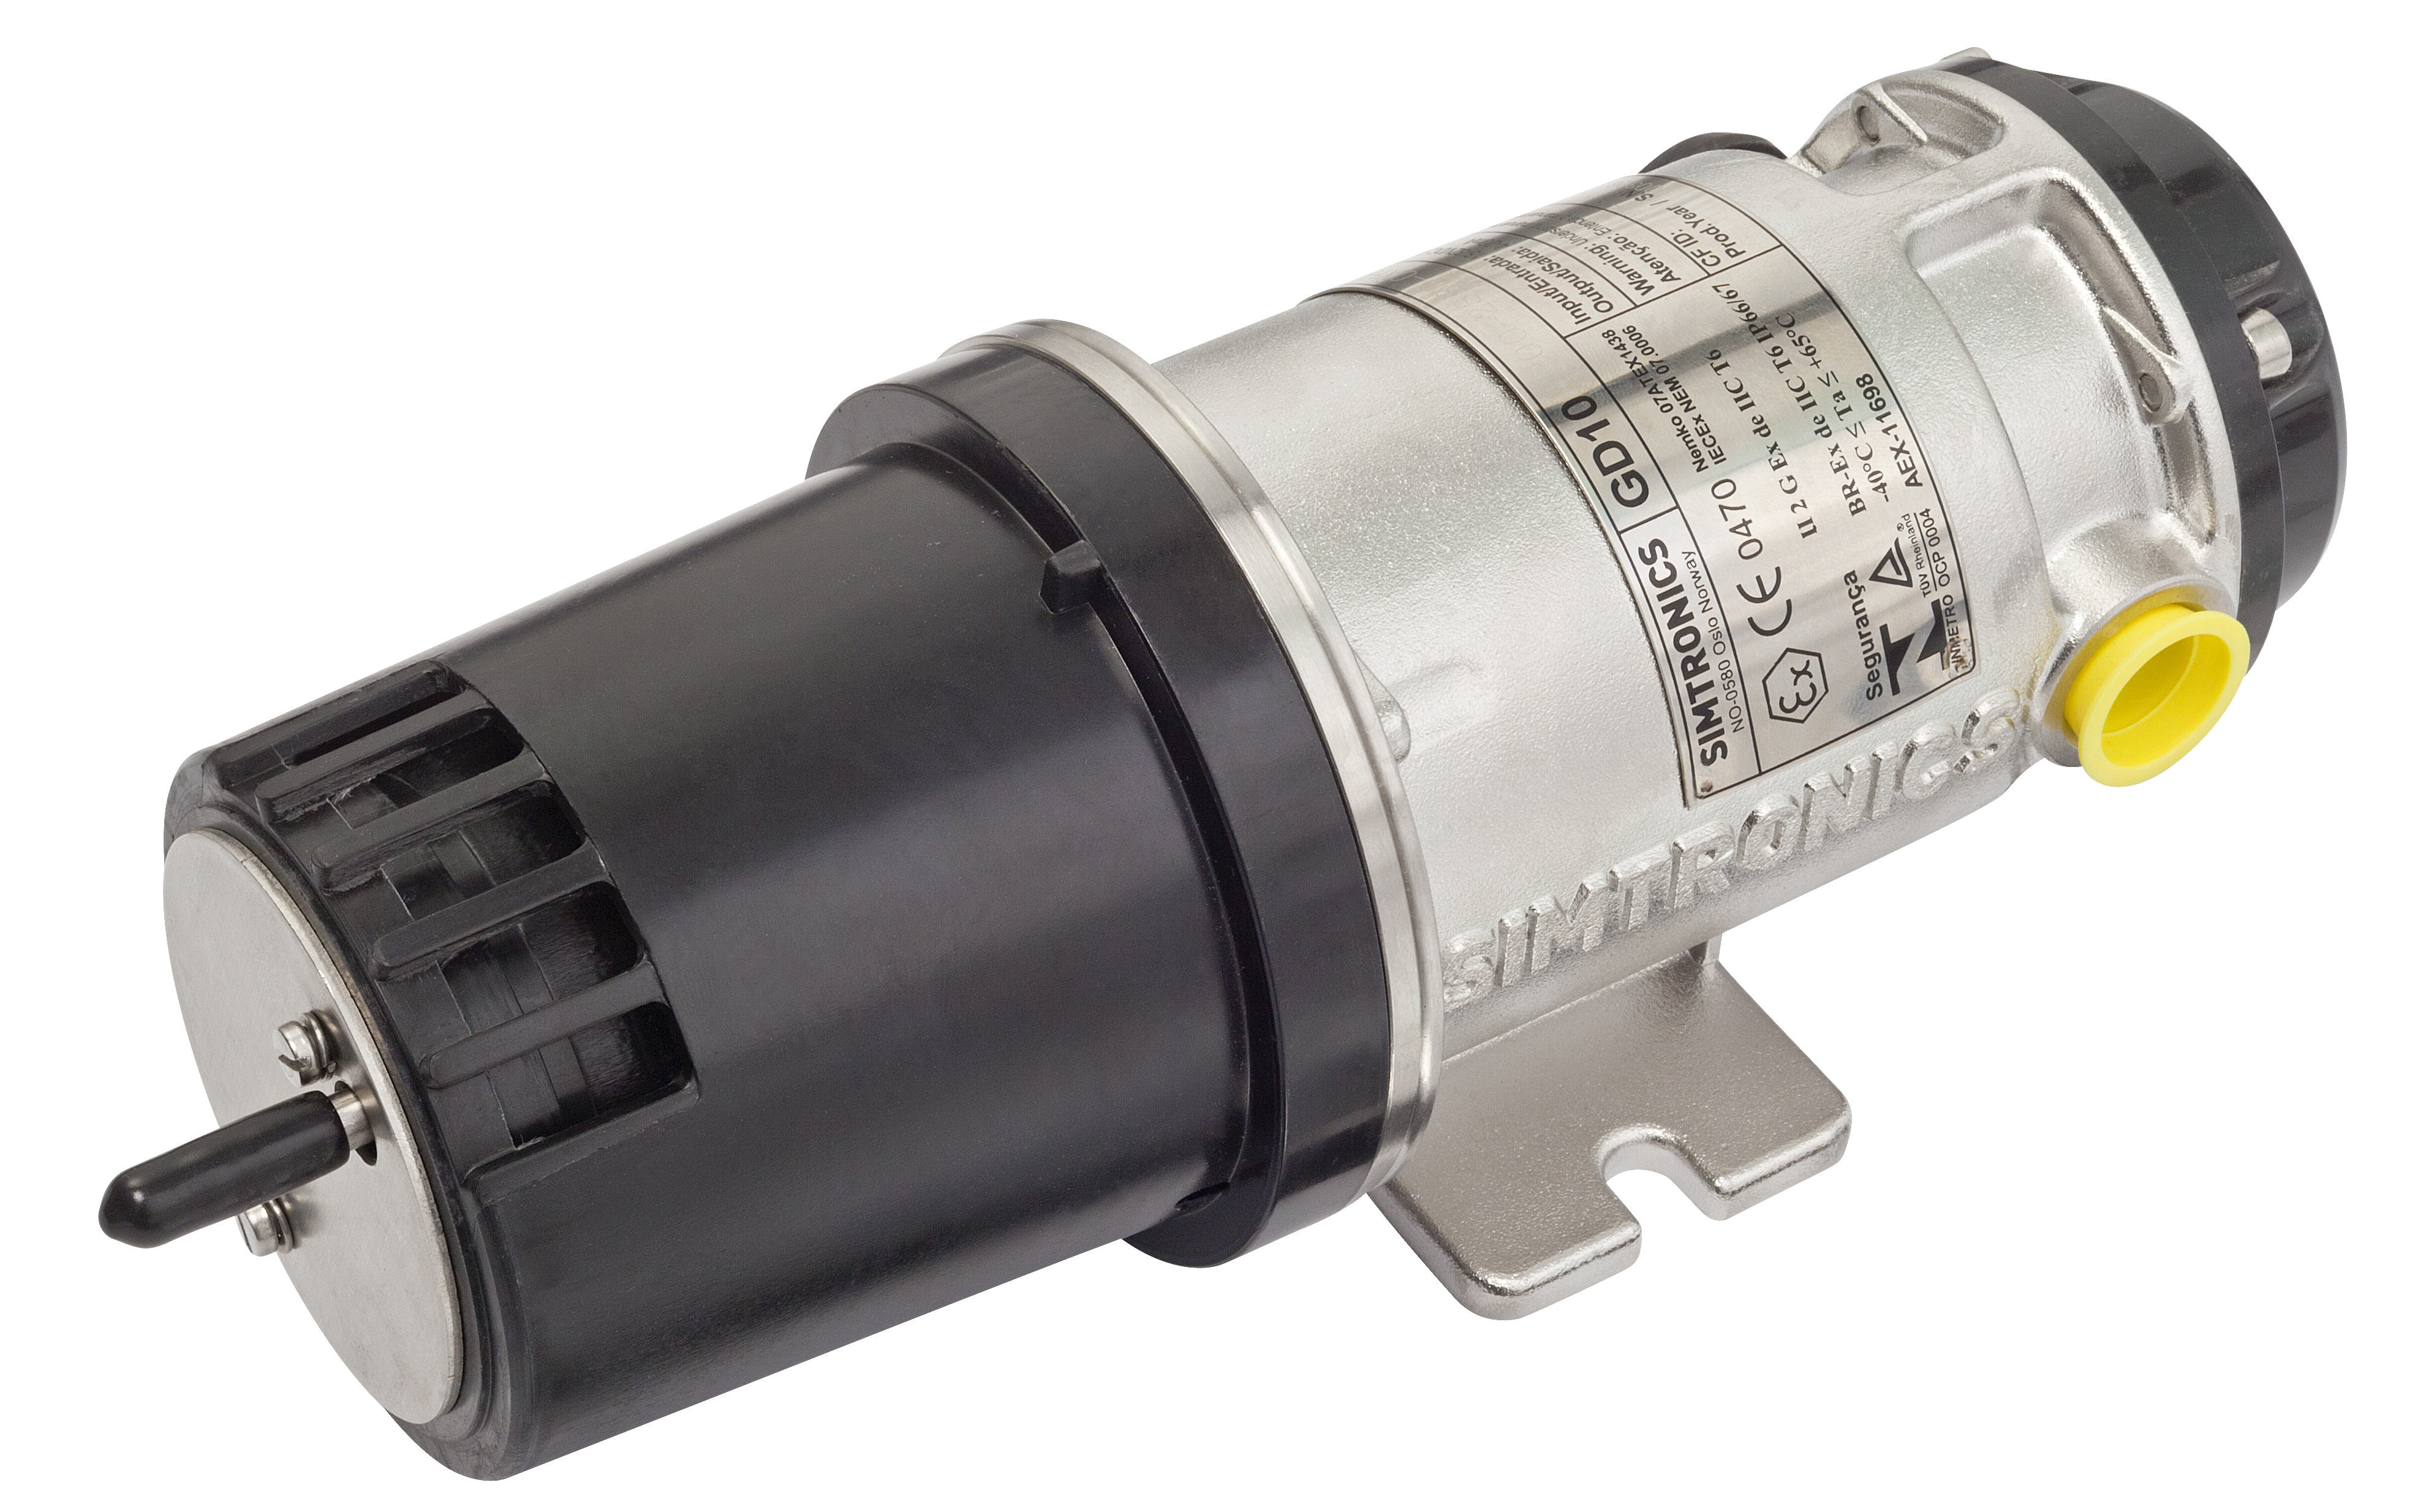 iR-gas R32 Refrigerant Gas Detector 0-1,000 ppm - GDA